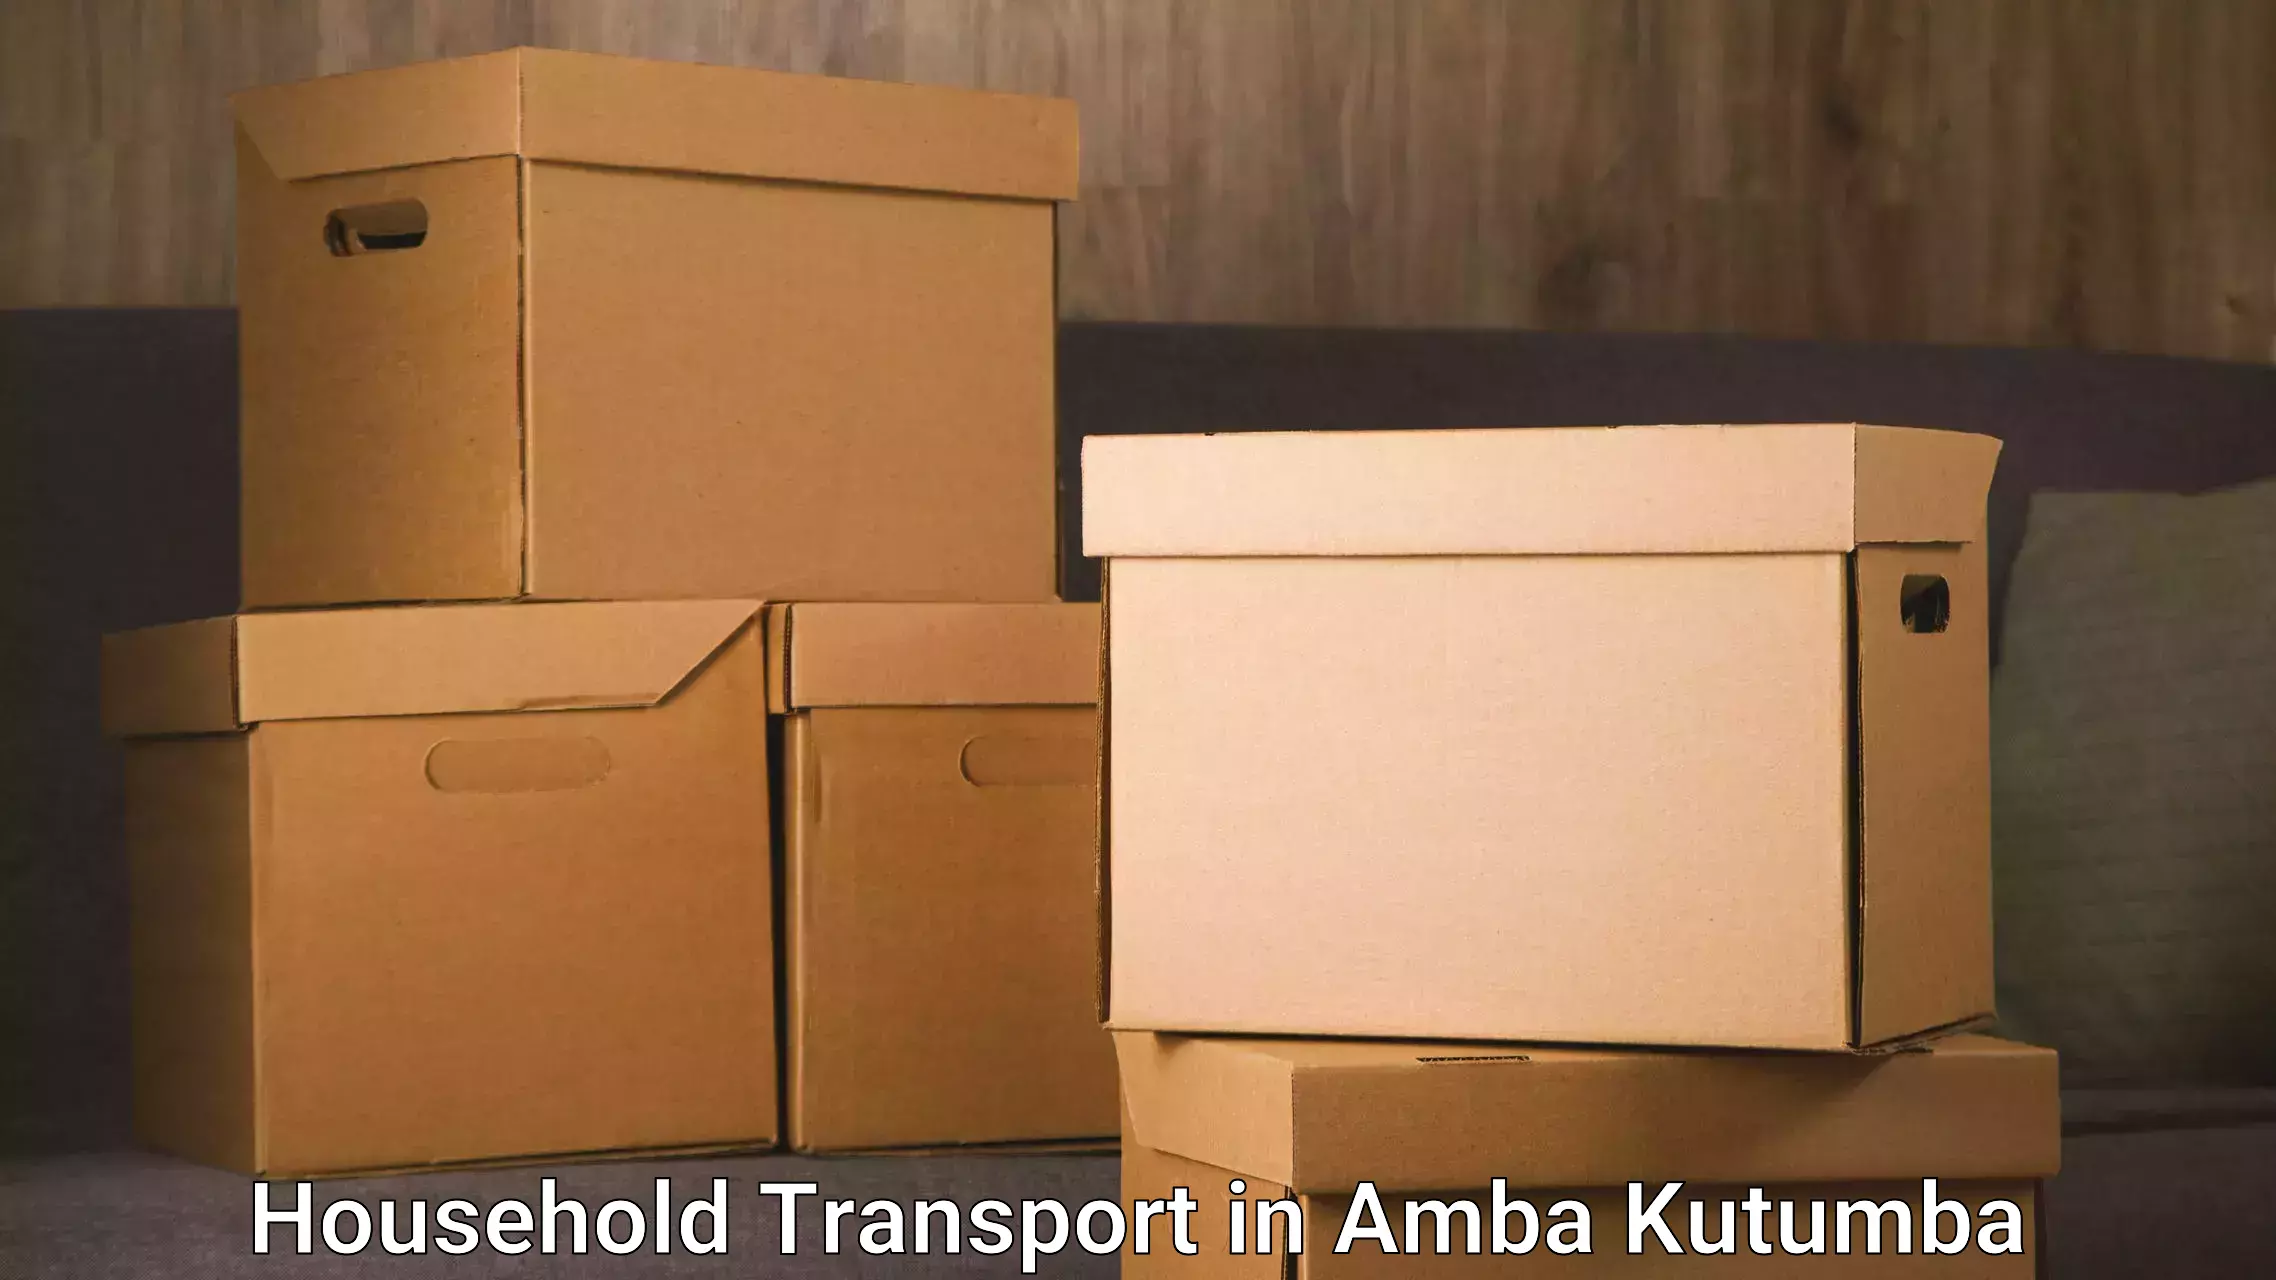 Furniture relocation experts in Amba Kutumba